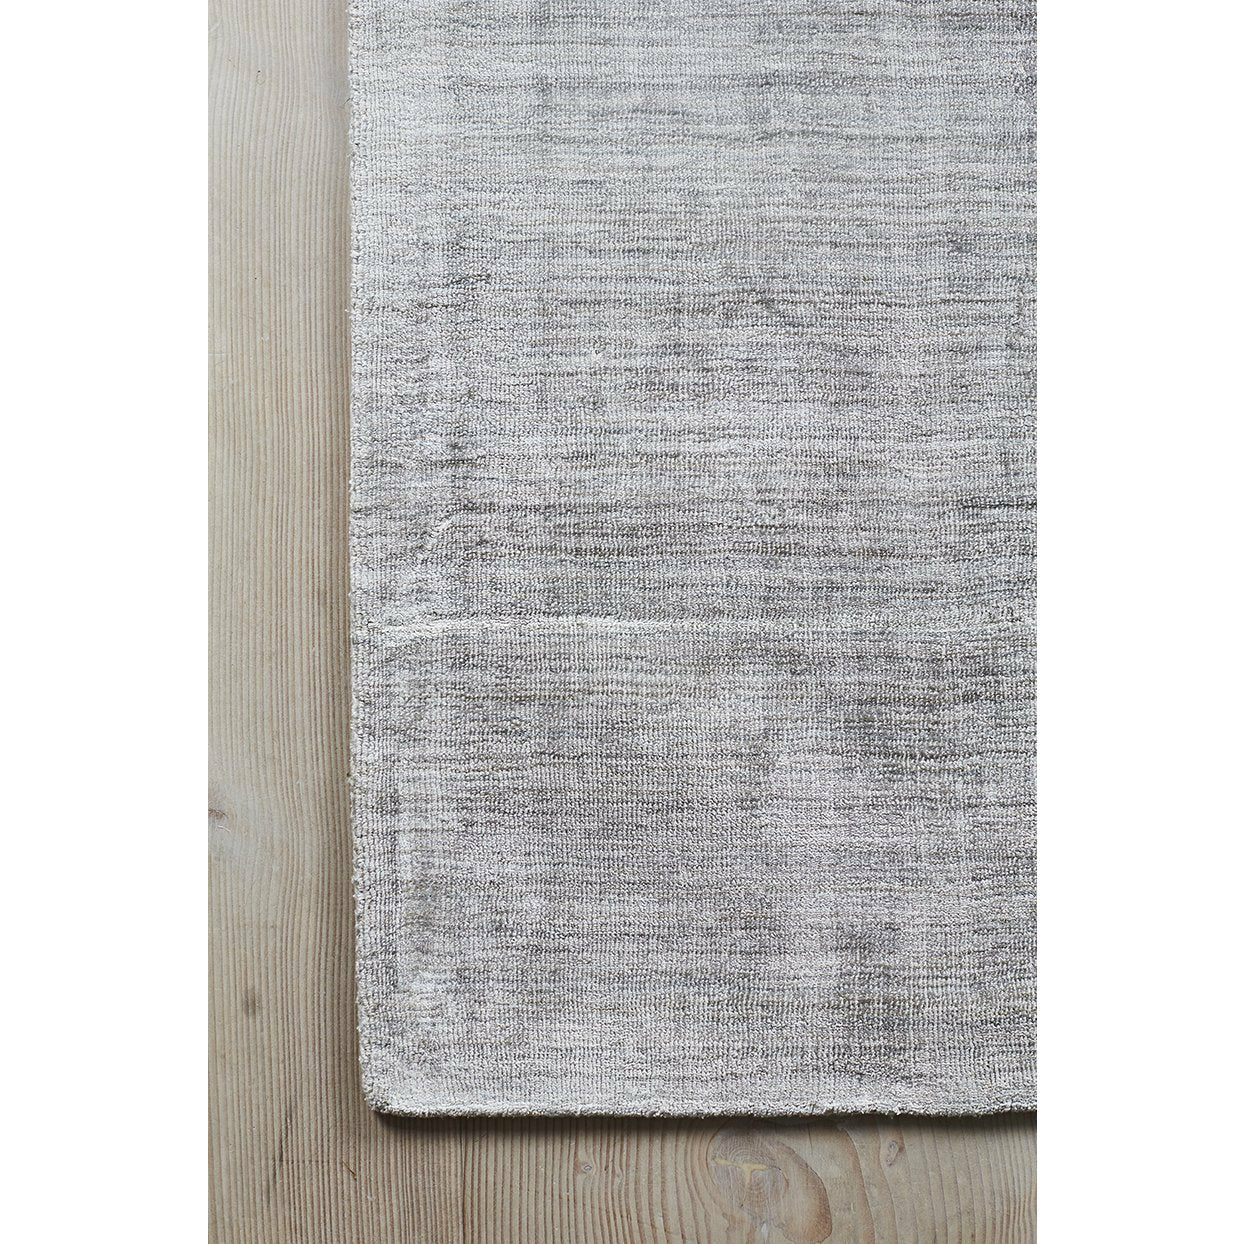 Massimo Karma tapis gris clair, 160x230 cm